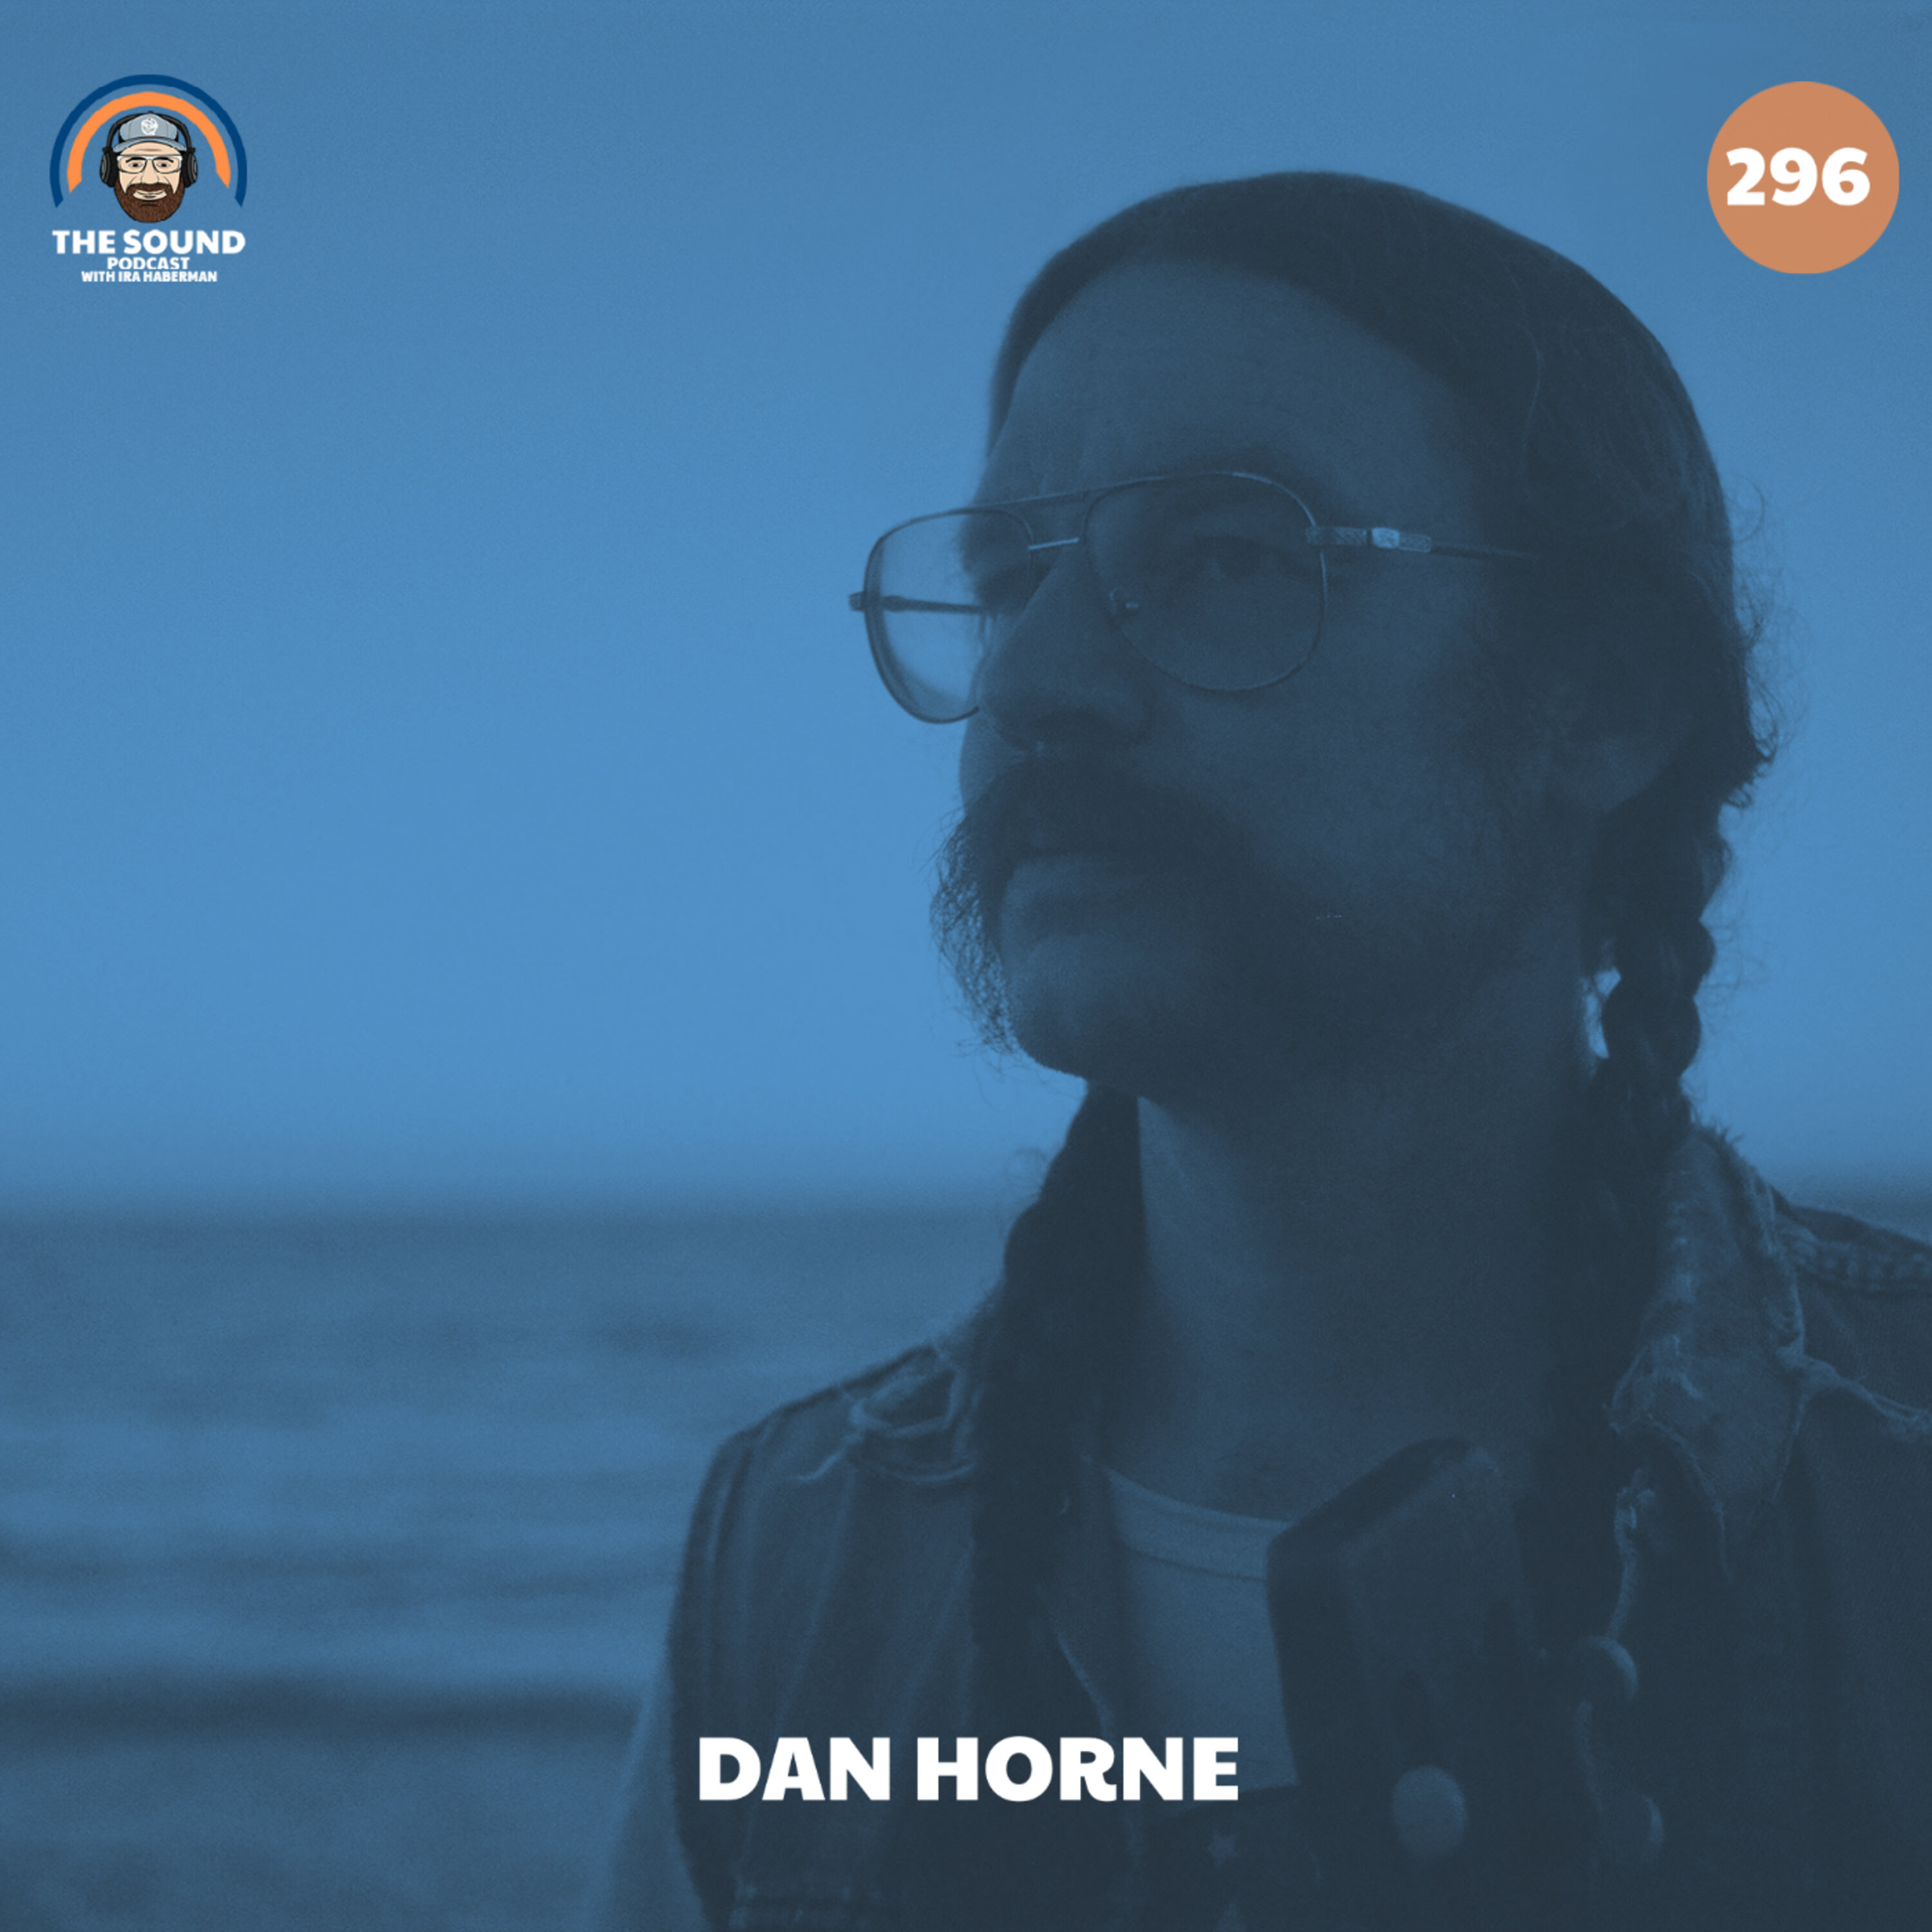 Dan Horne